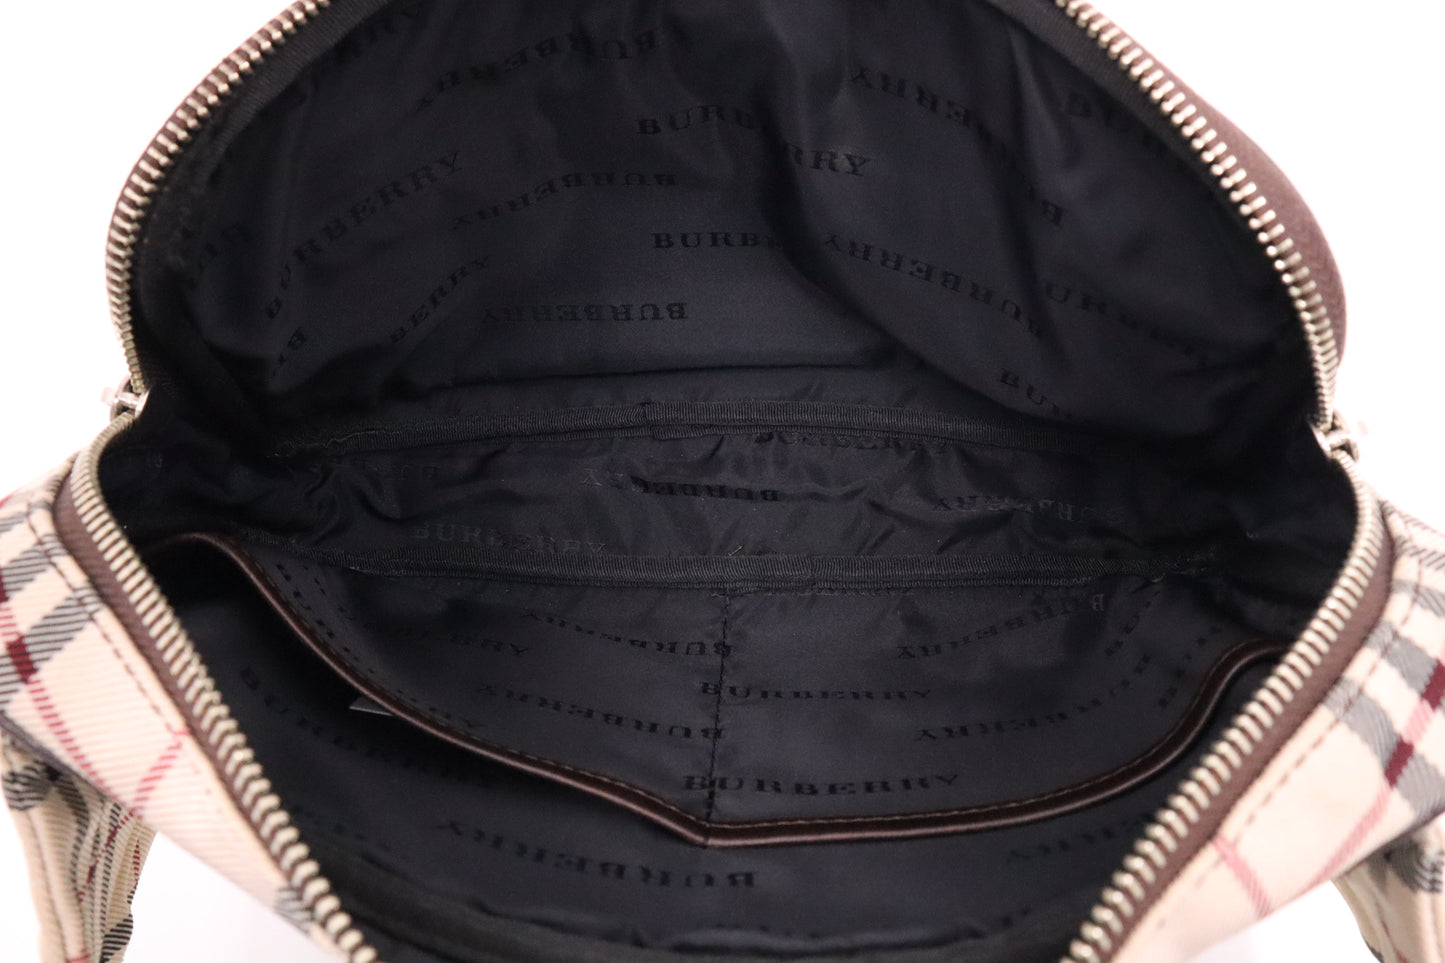 Burberry Belt Bag in Nova Check Canvas